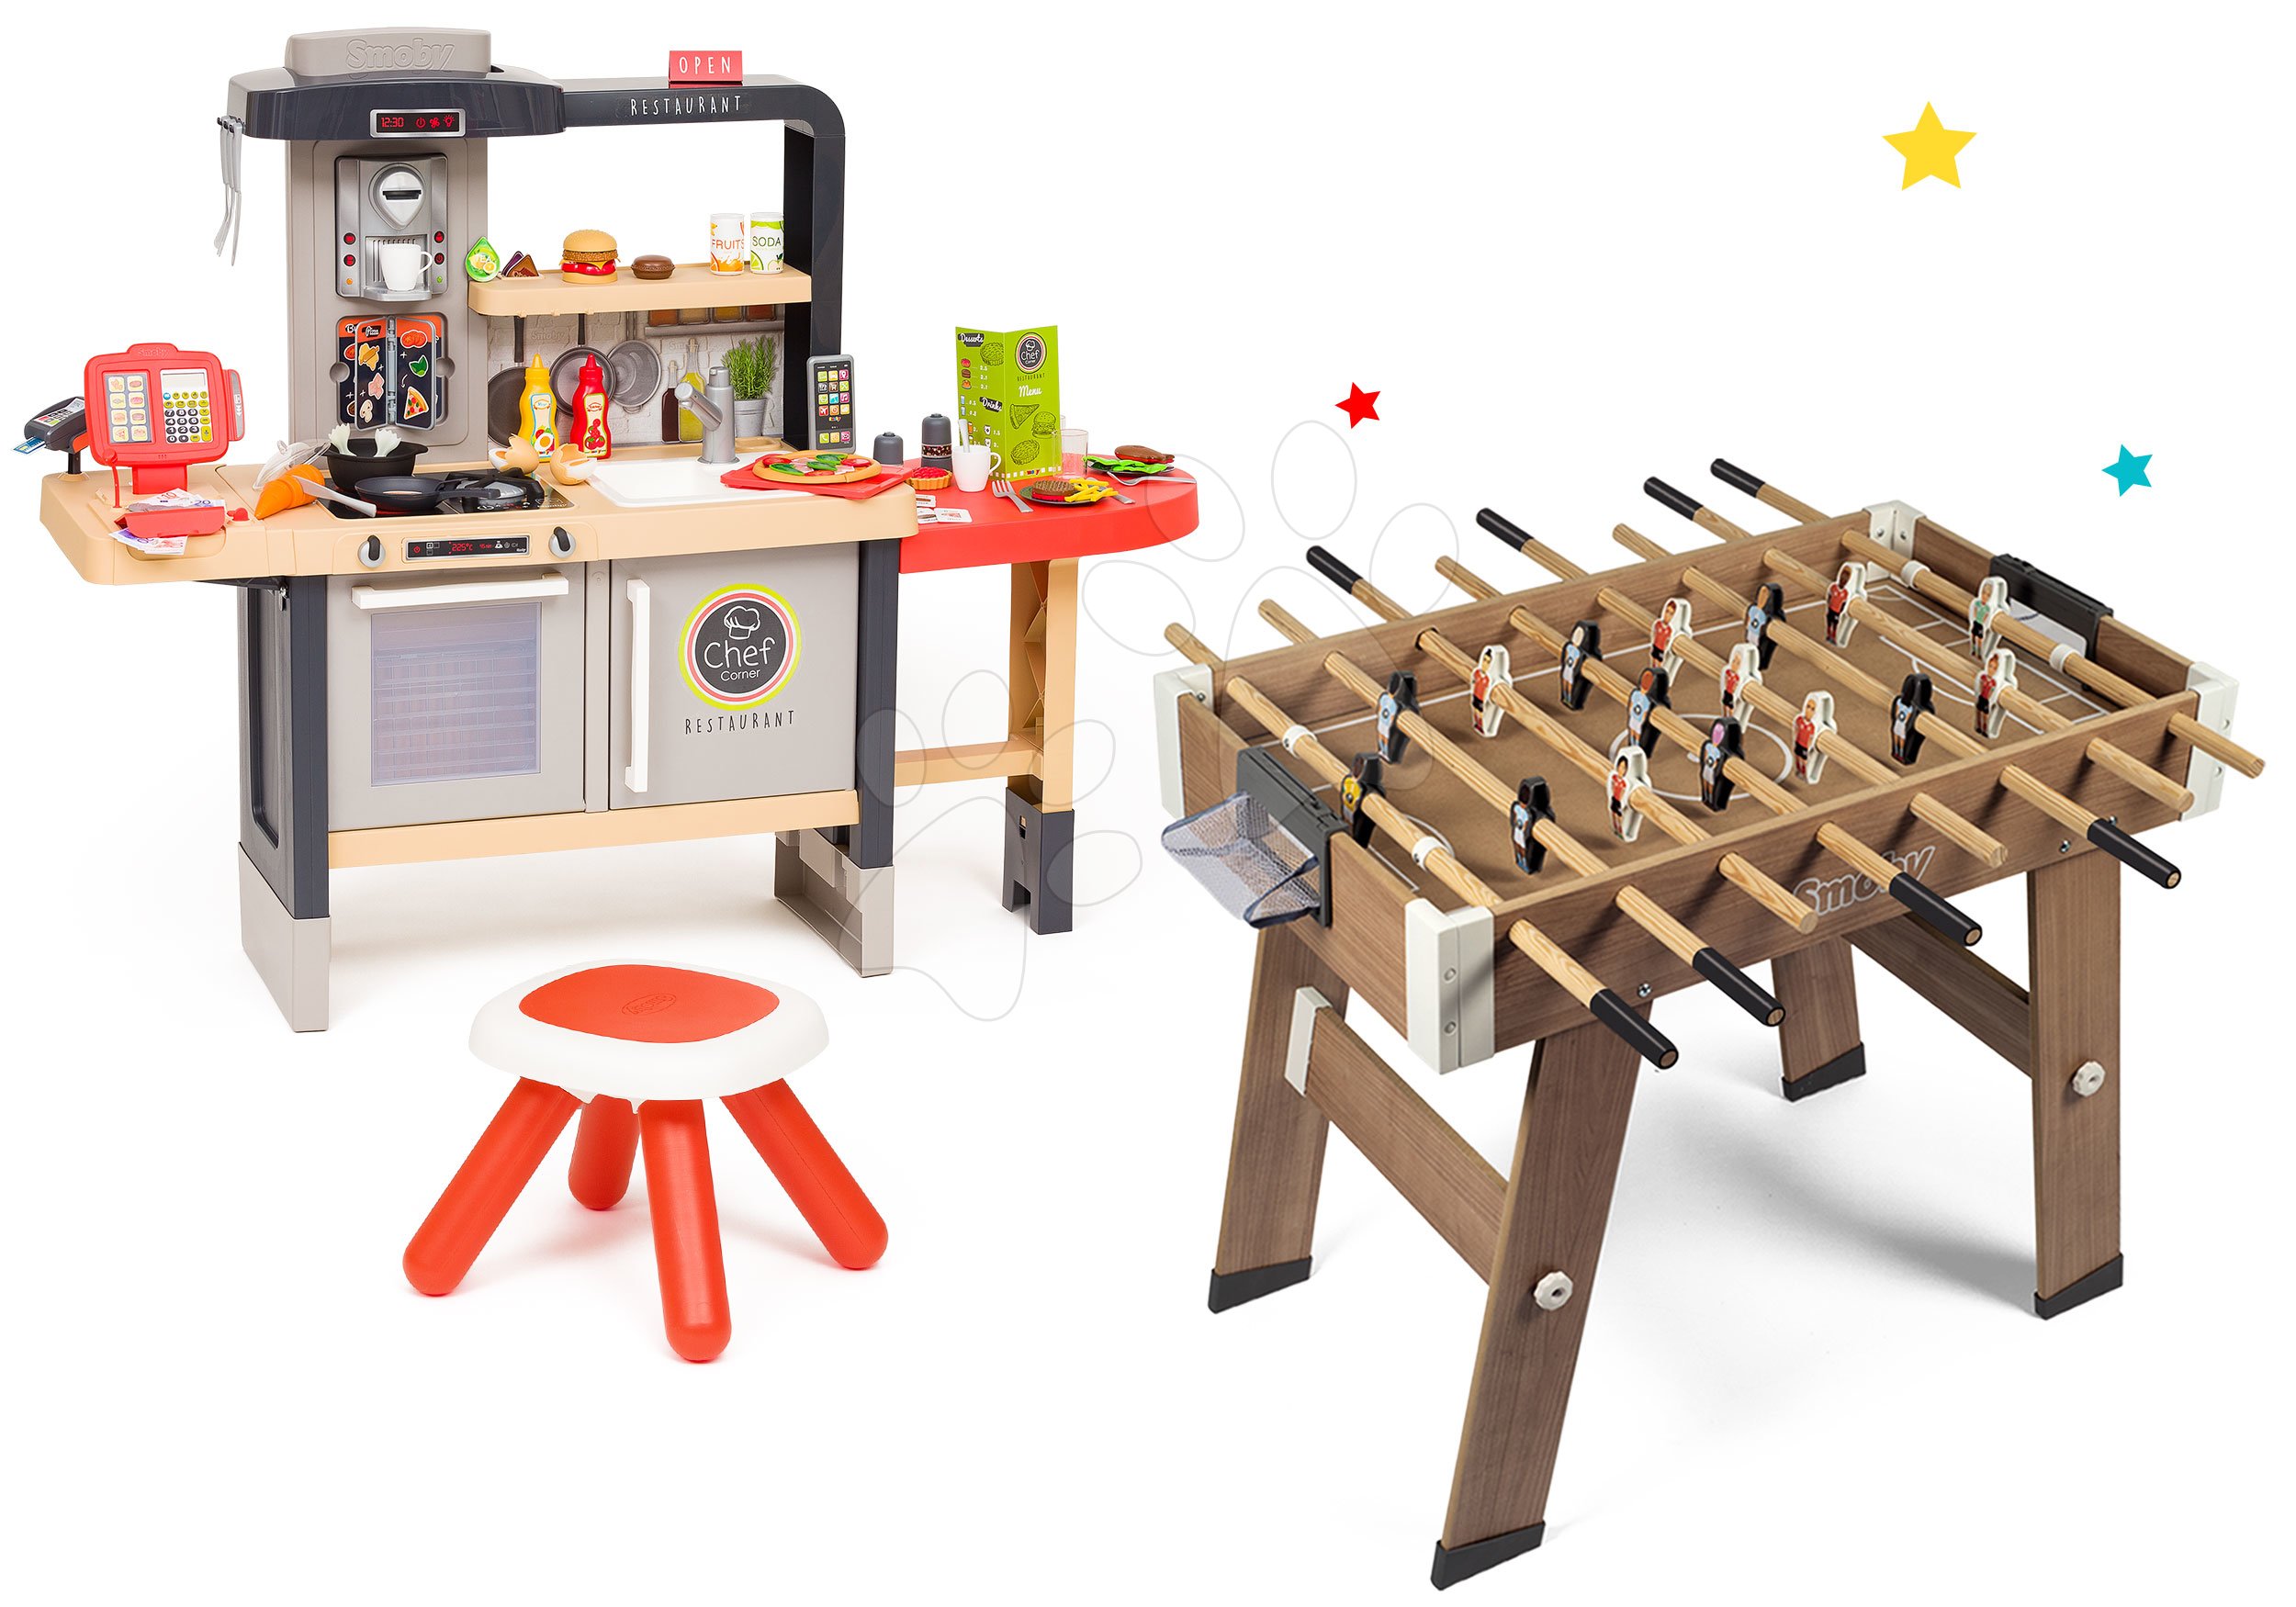 Set reštaurácia s elektronickou kuchynkou Chef Corner Restaurant Smoby s dreveným futbalovým stolom